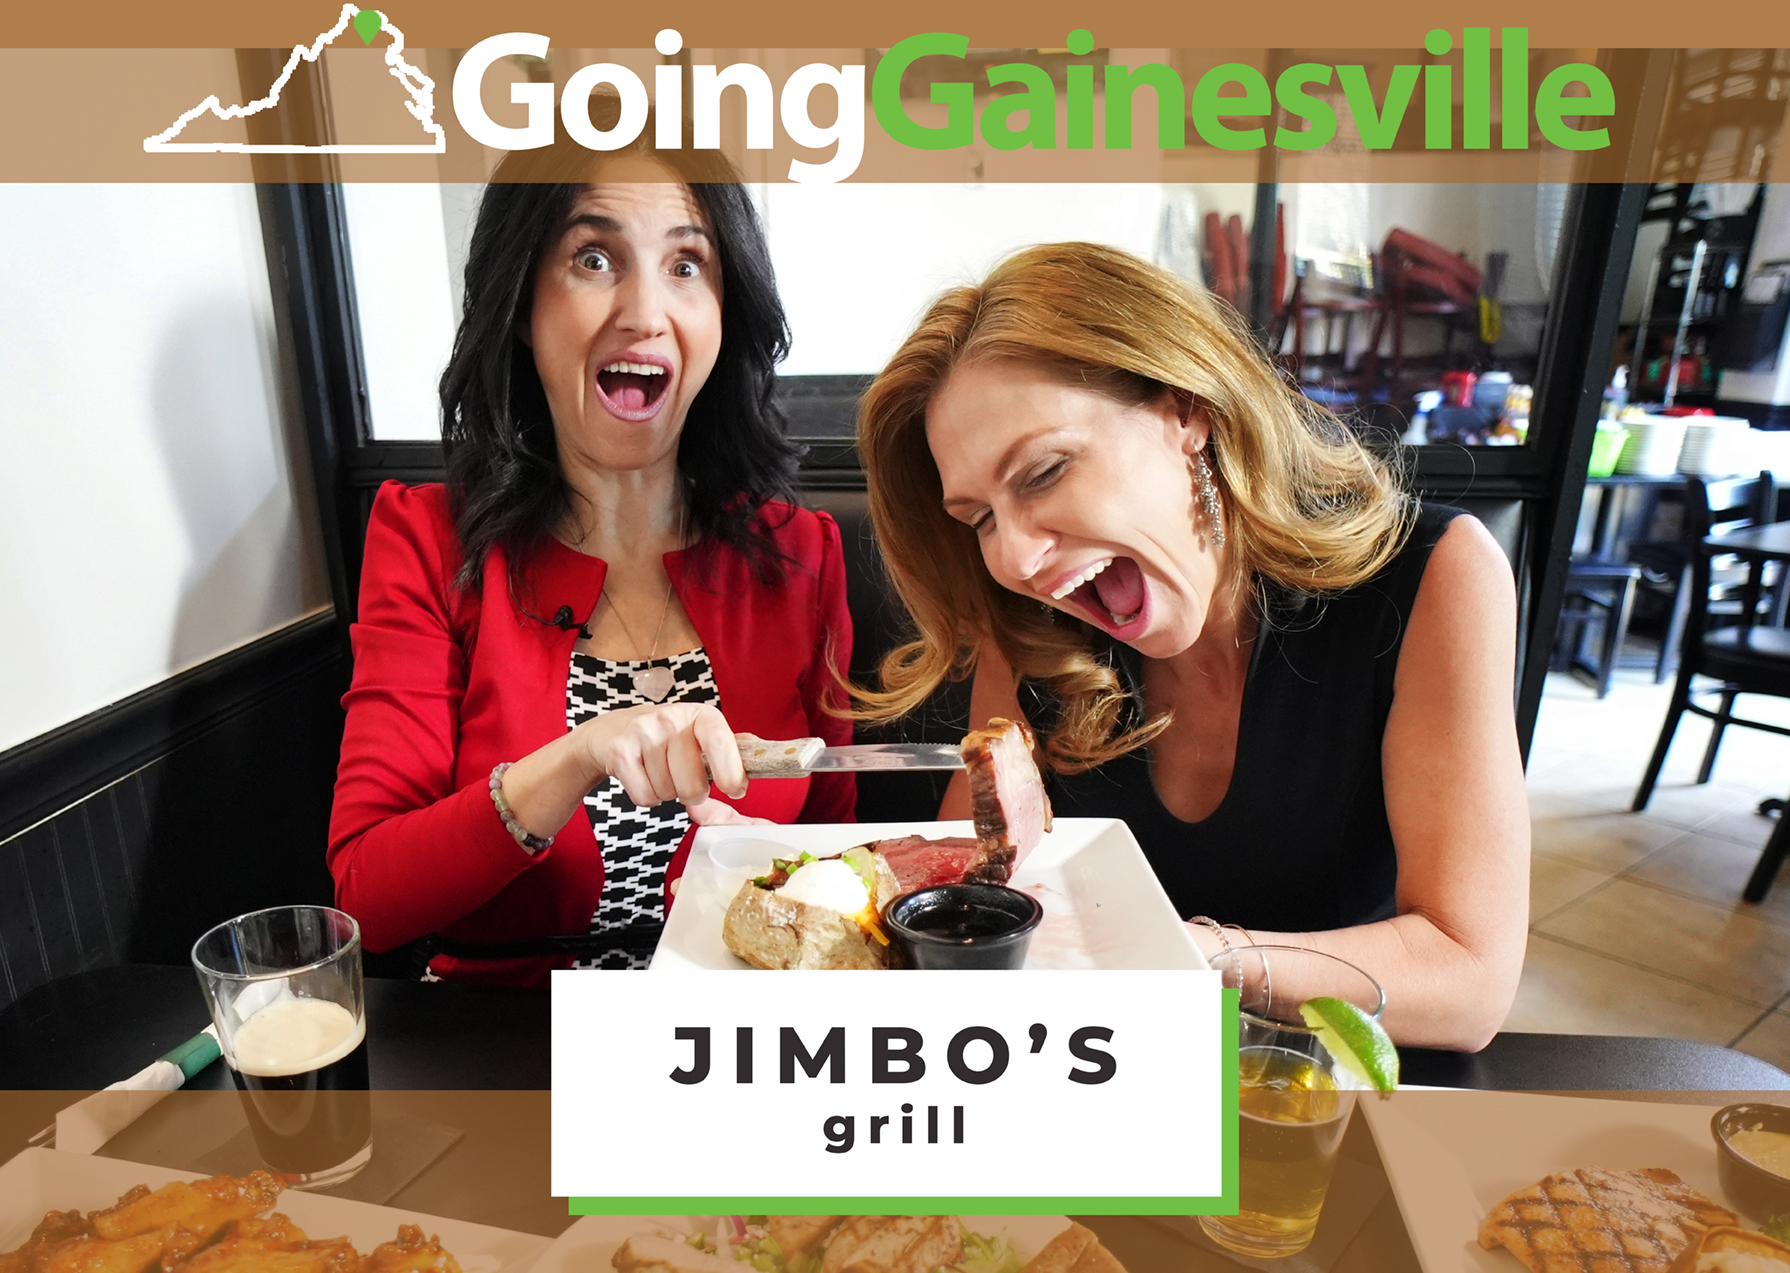 Jimbos Grill & Bar